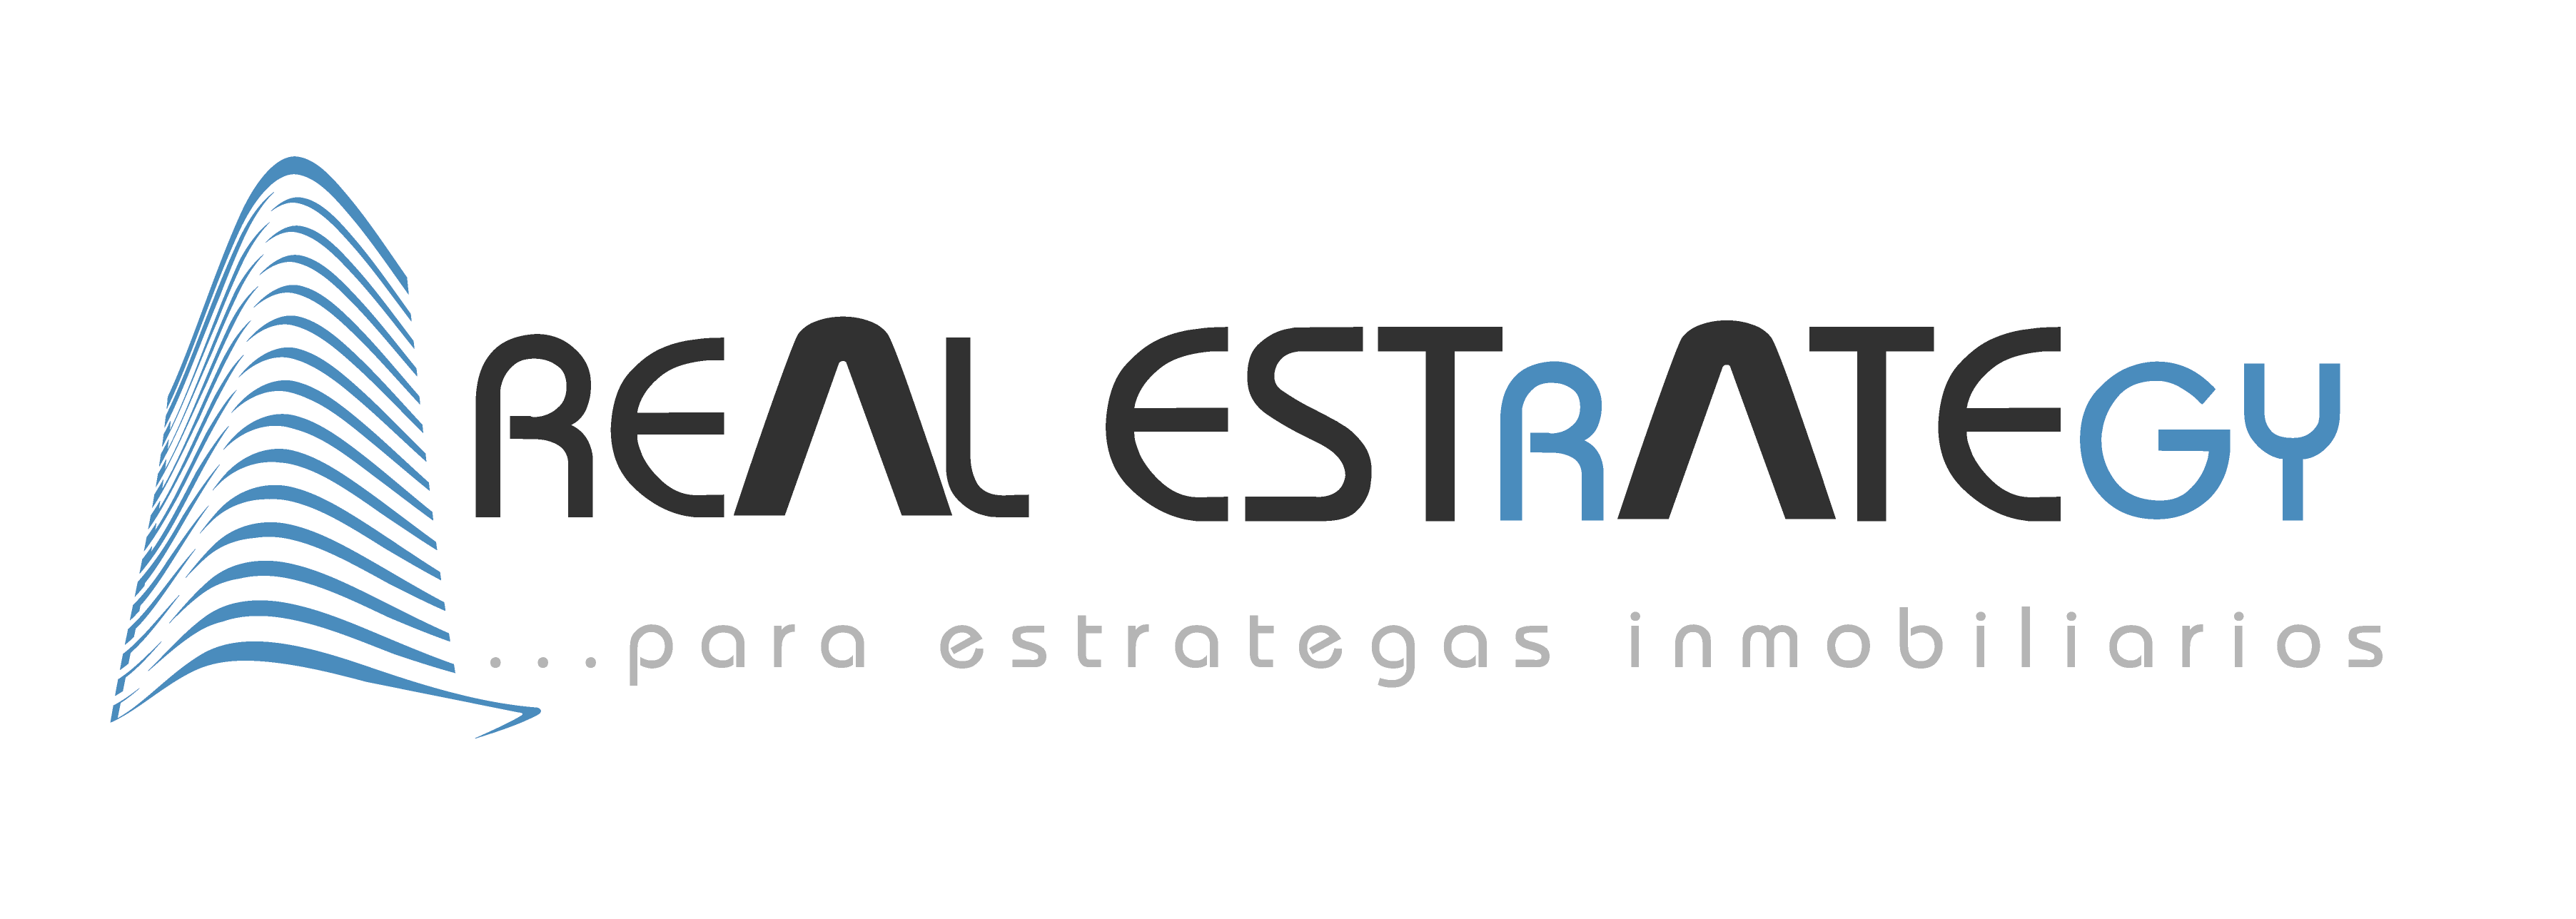 Real Estrategy Logo